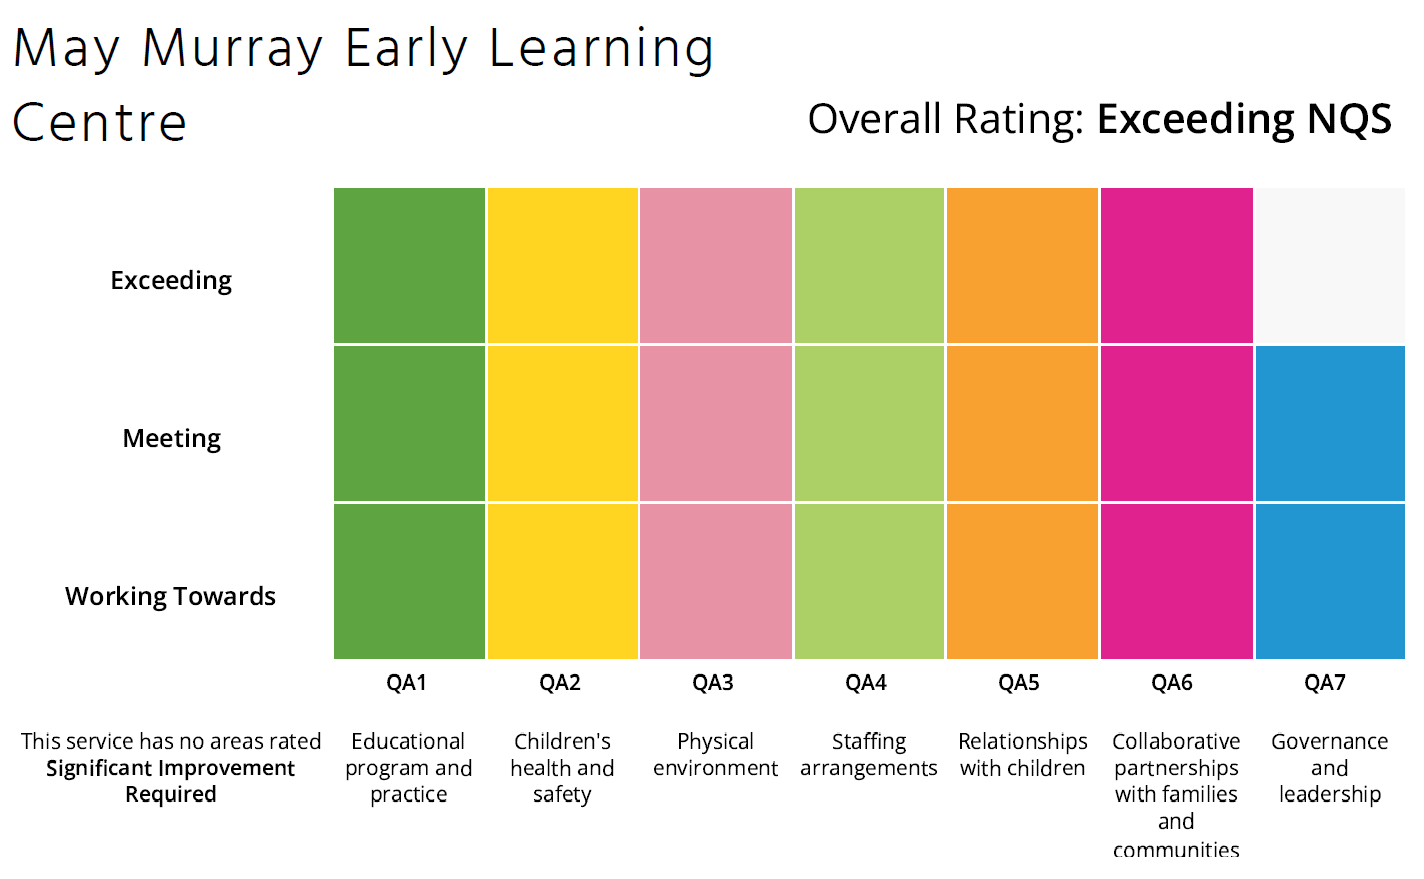 ACECQA Ratings Chart - May Murray